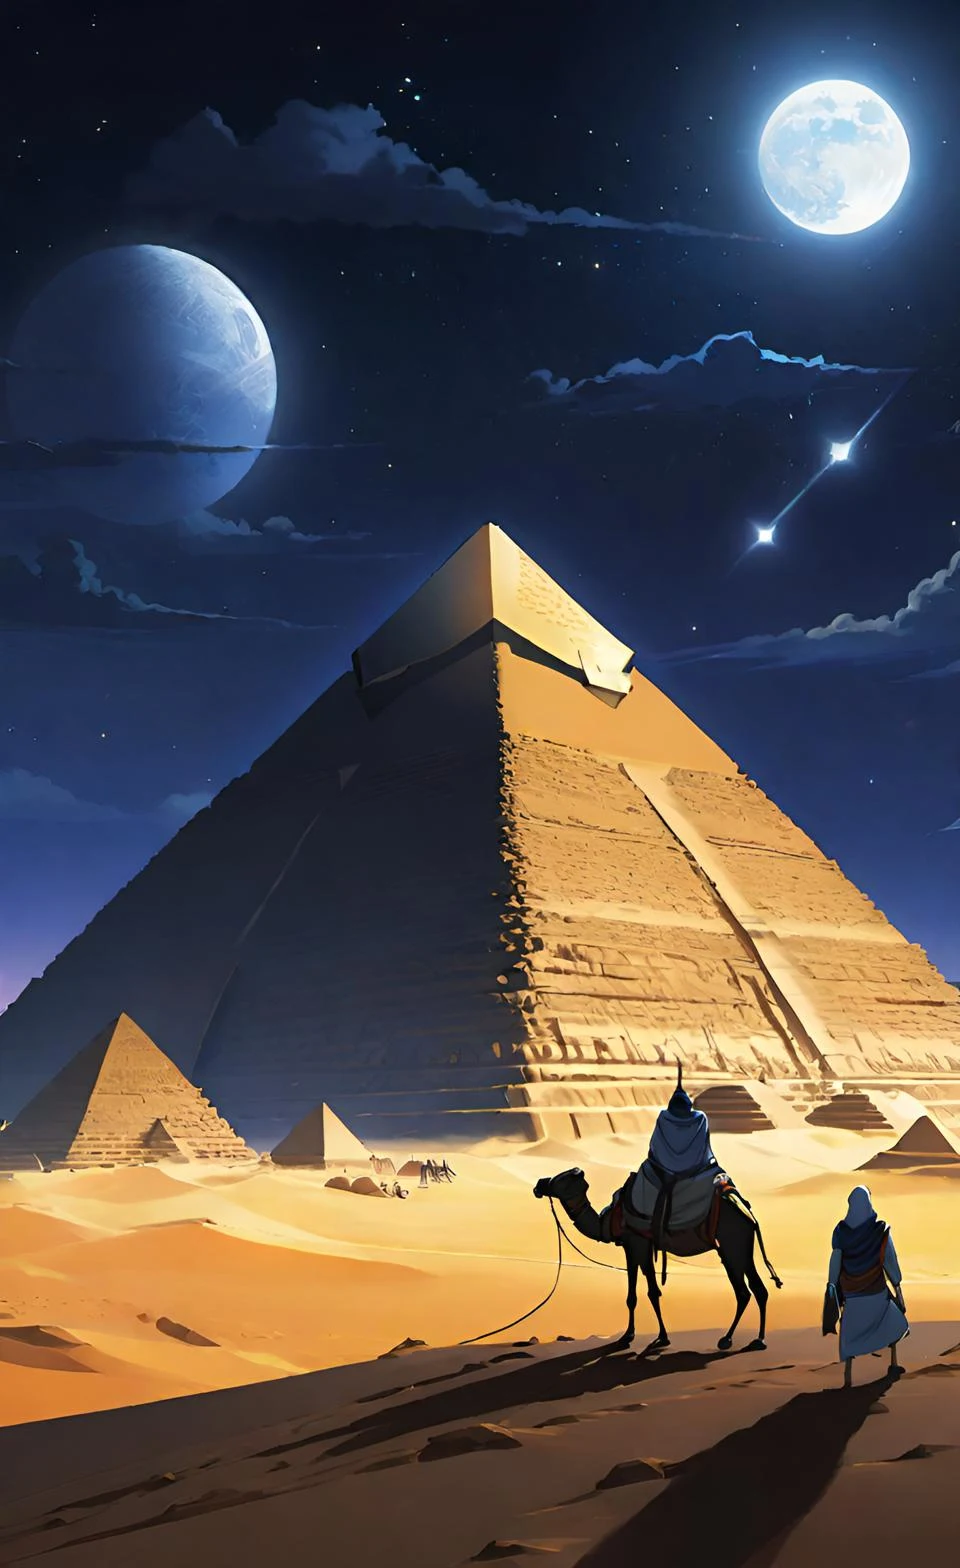 اجمل خلفيات اهرامات مصر بمنظر ليلي رائع